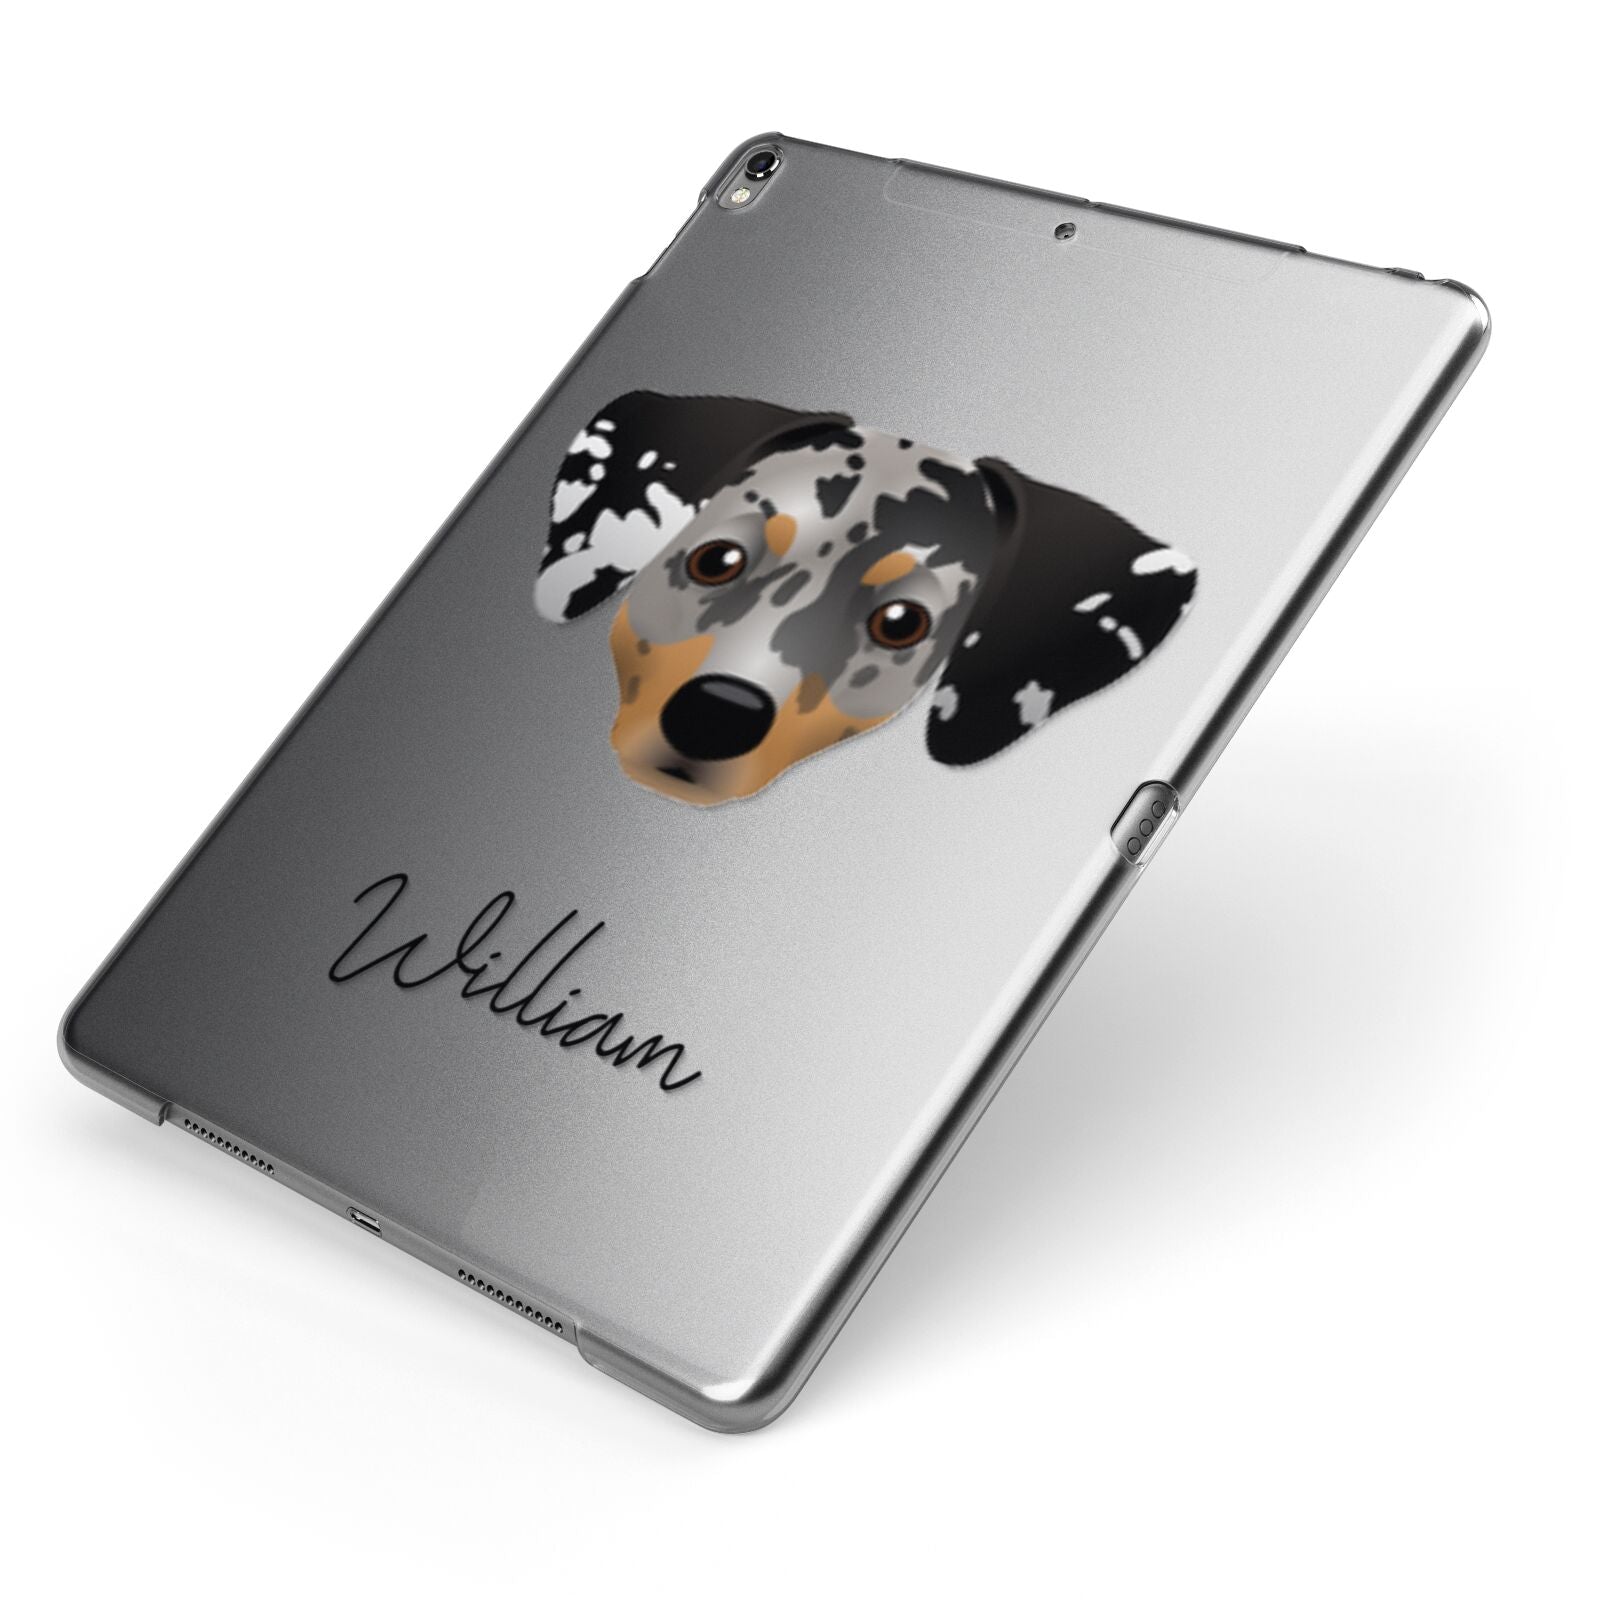 Chiweenie Personalised Apple iPad Case on Grey iPad Side View